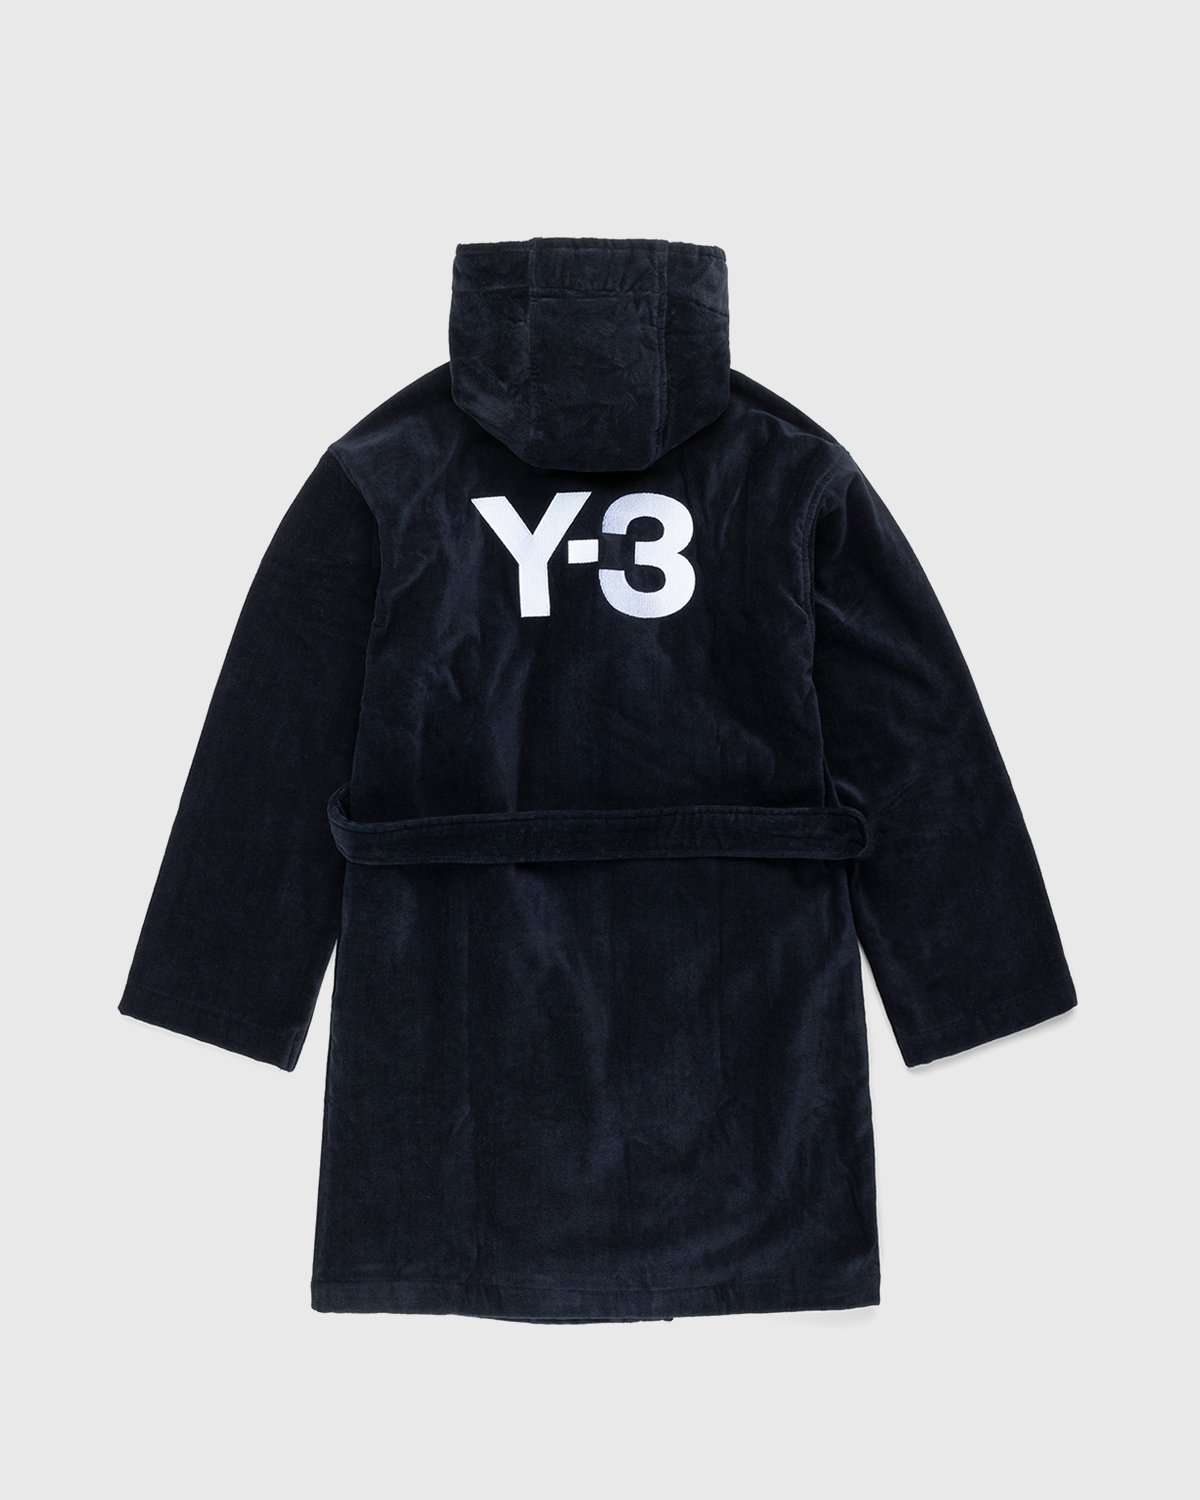 Y-3 - Cotton Bathrobe Black - Lifestyle - Black - Image 1